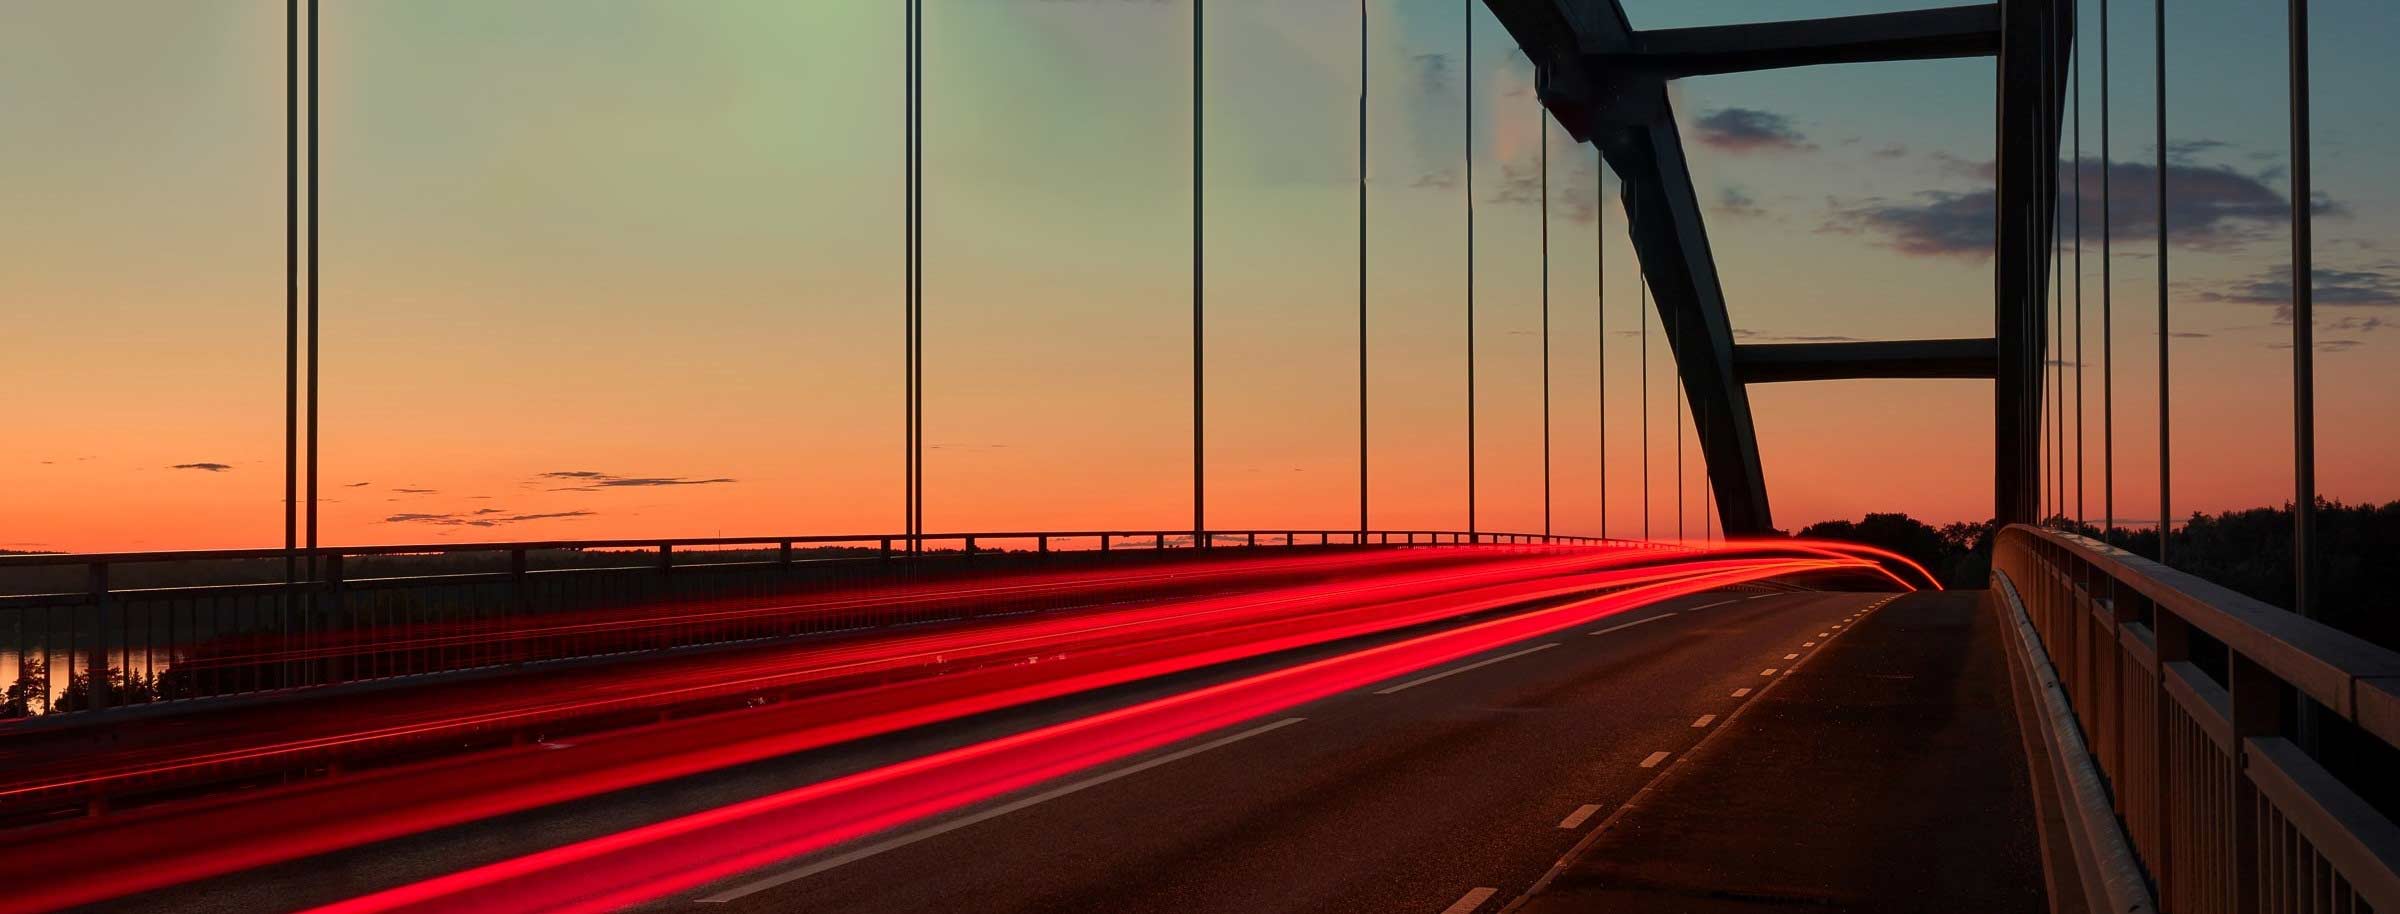 bridge with traffice at sunset